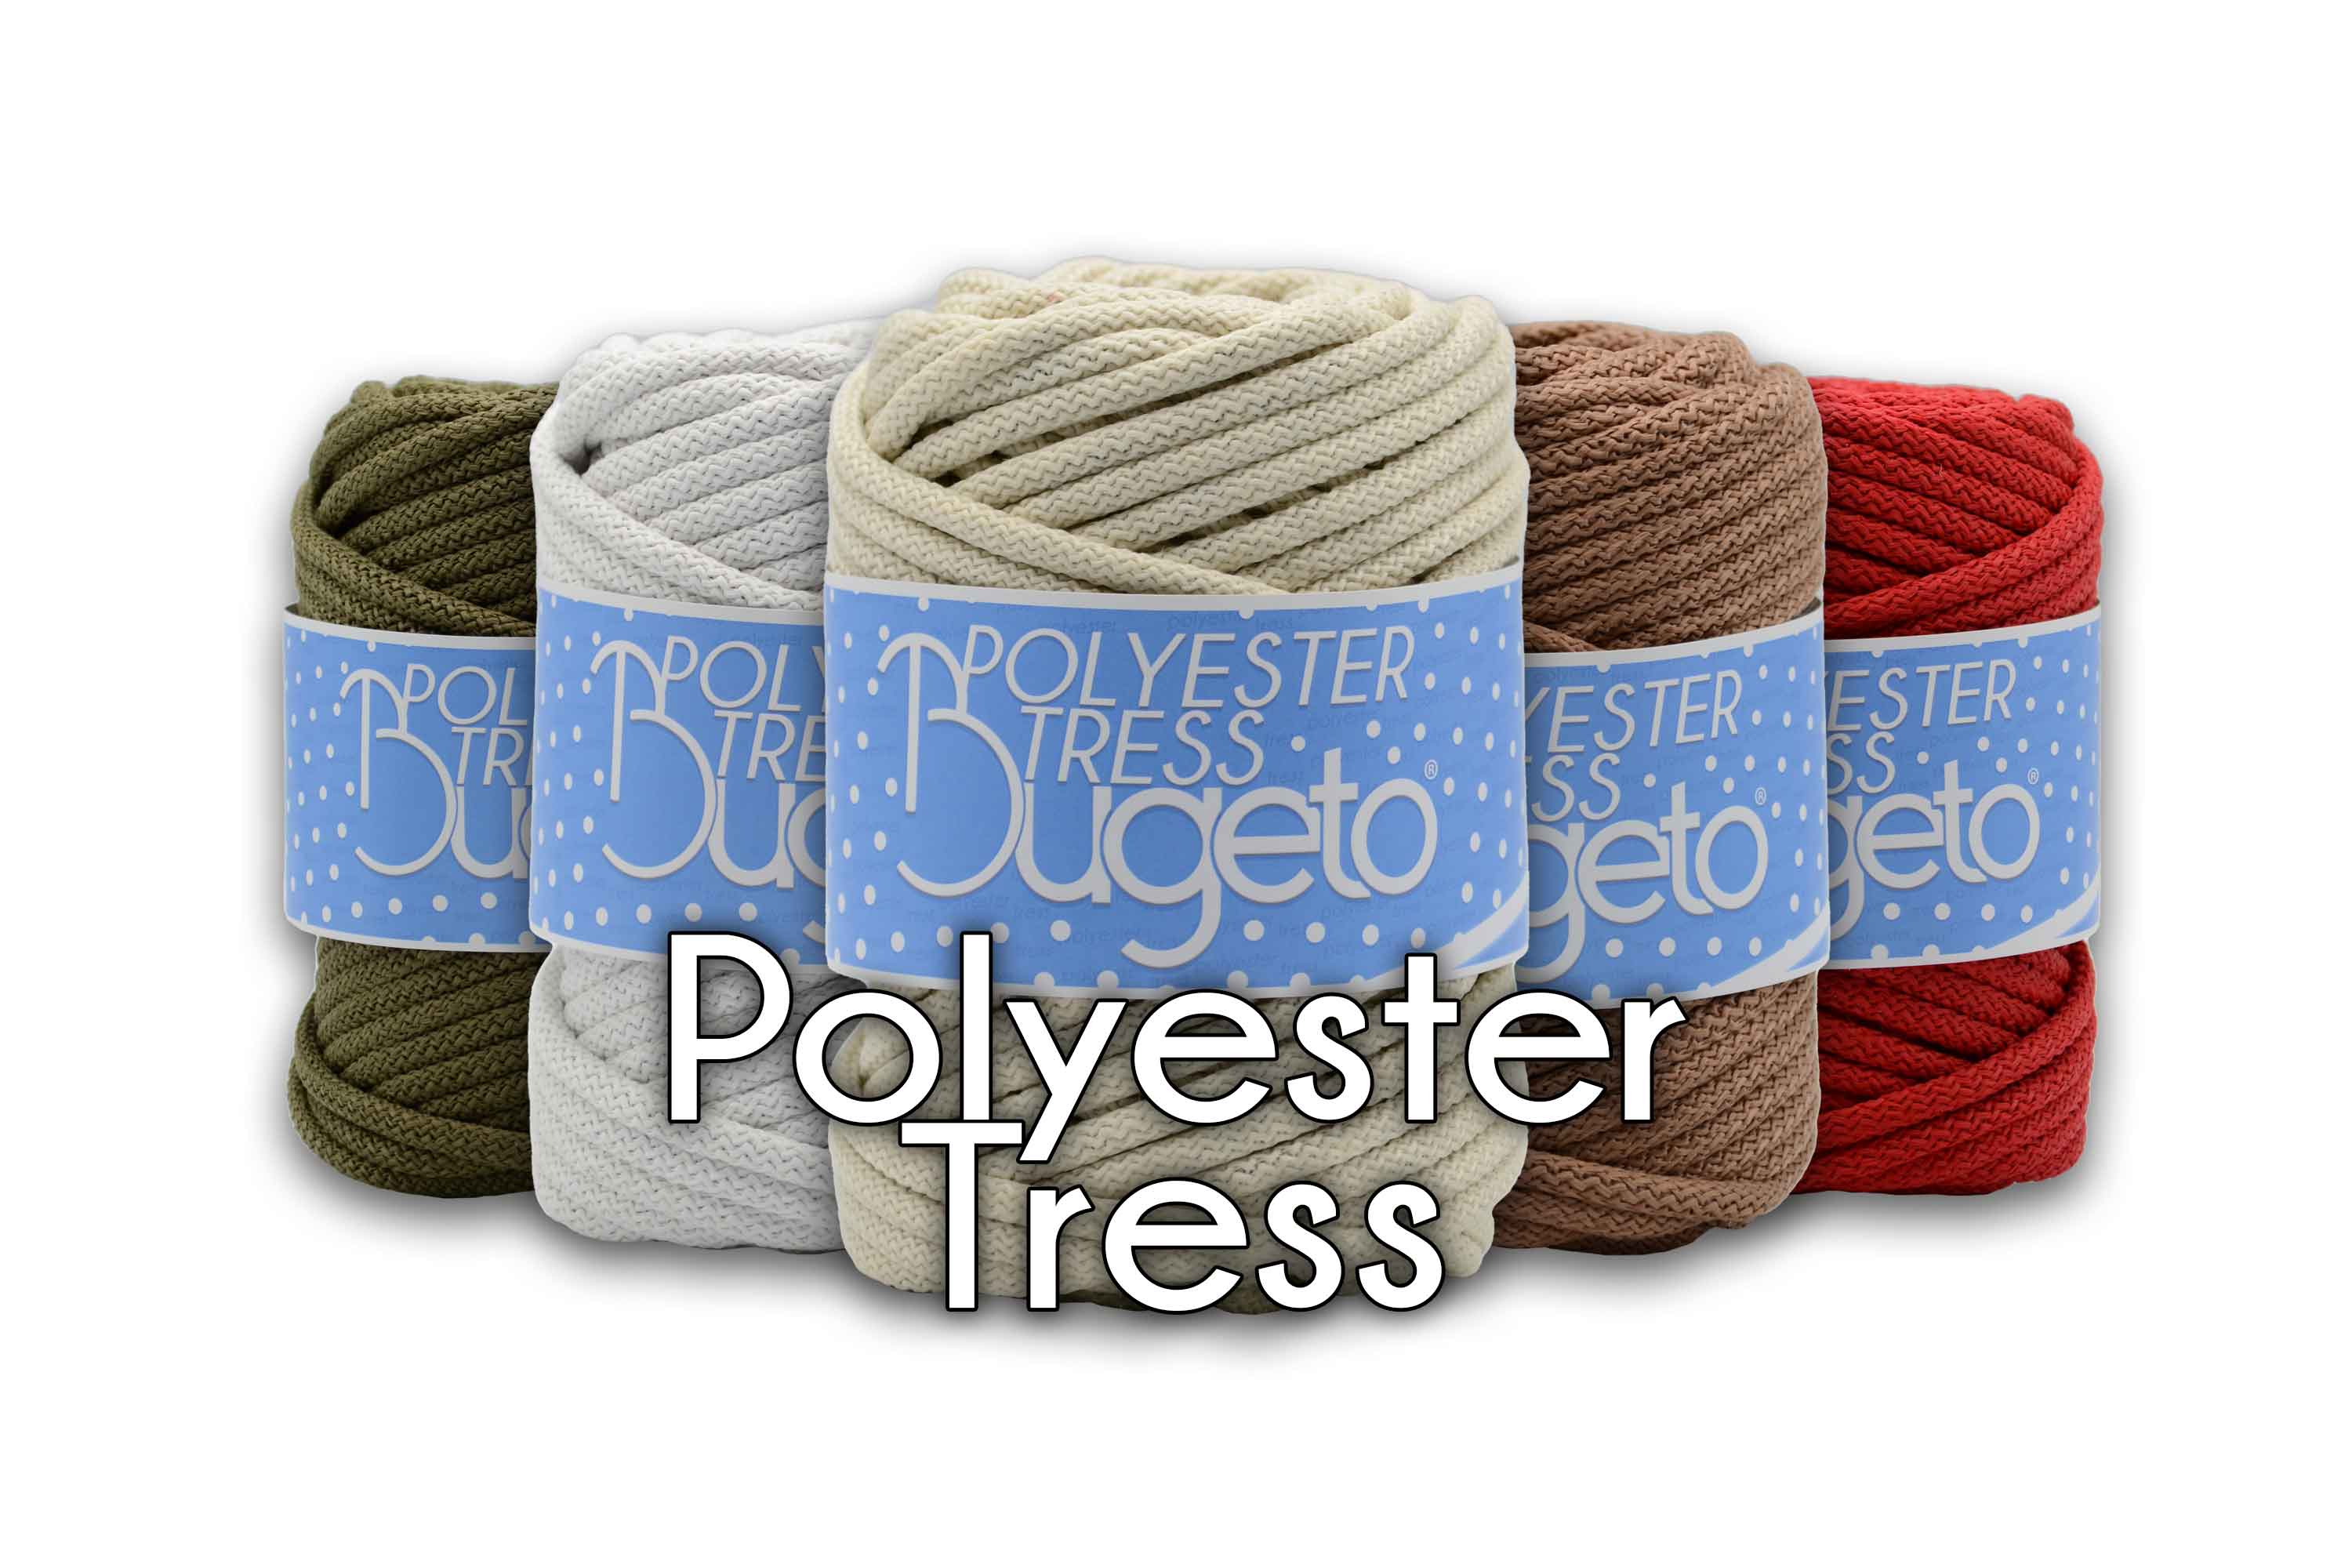 polyster yarns tress polyester tress sewing yarn polyester sewing yarn colored yarns bugeto yarn